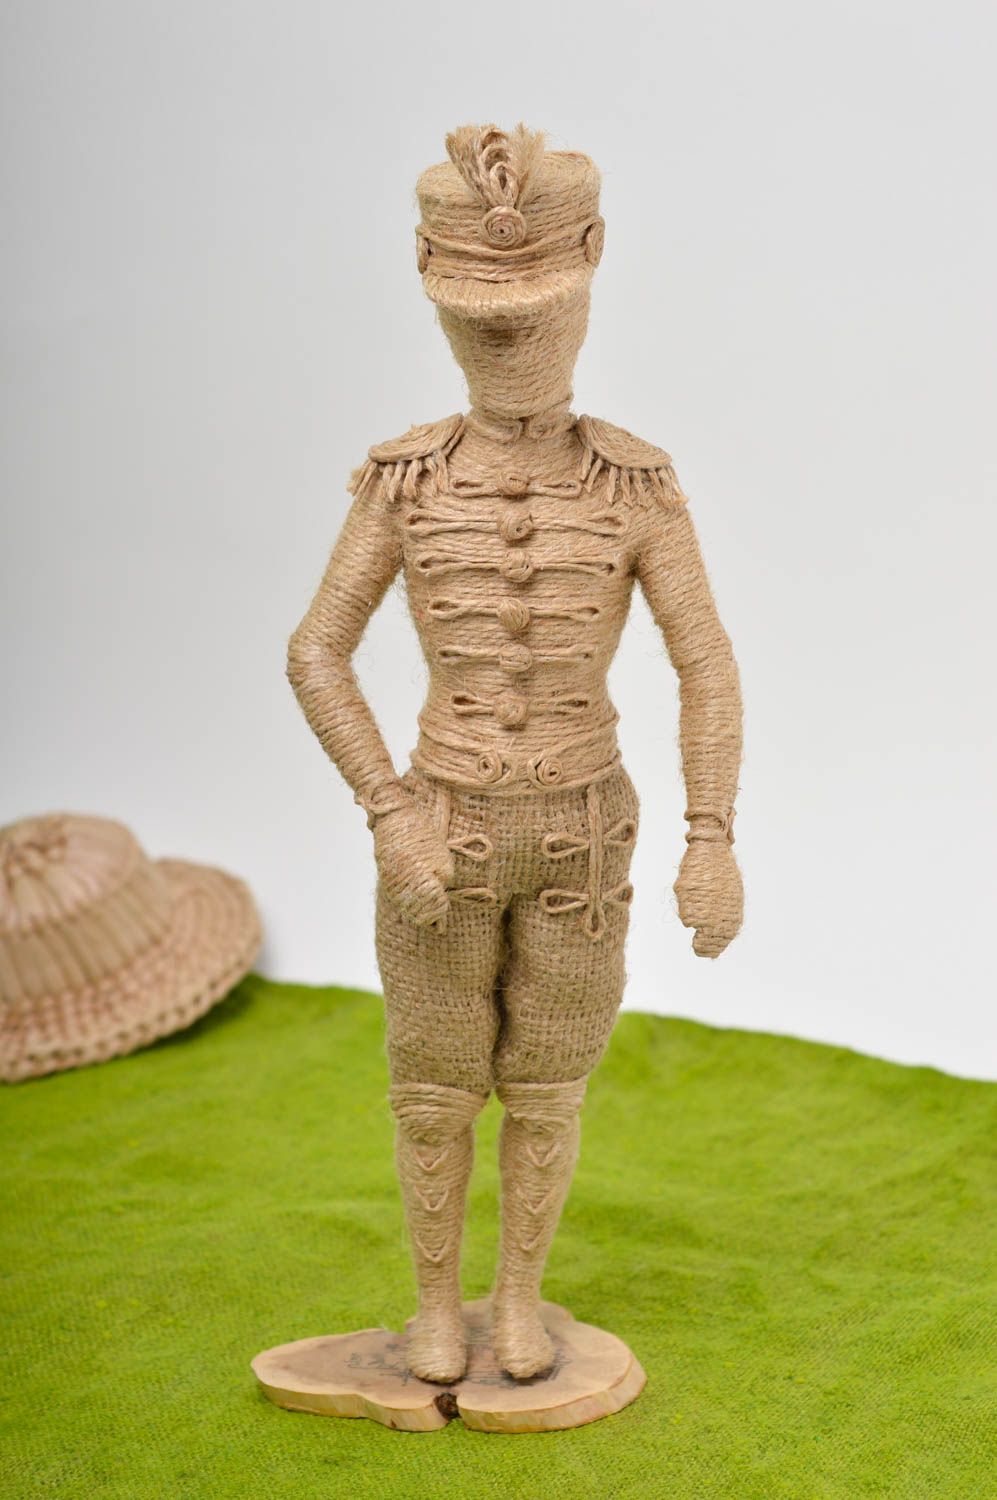 Handmade statuette designer figurine unusual gift decorative use only photo 1